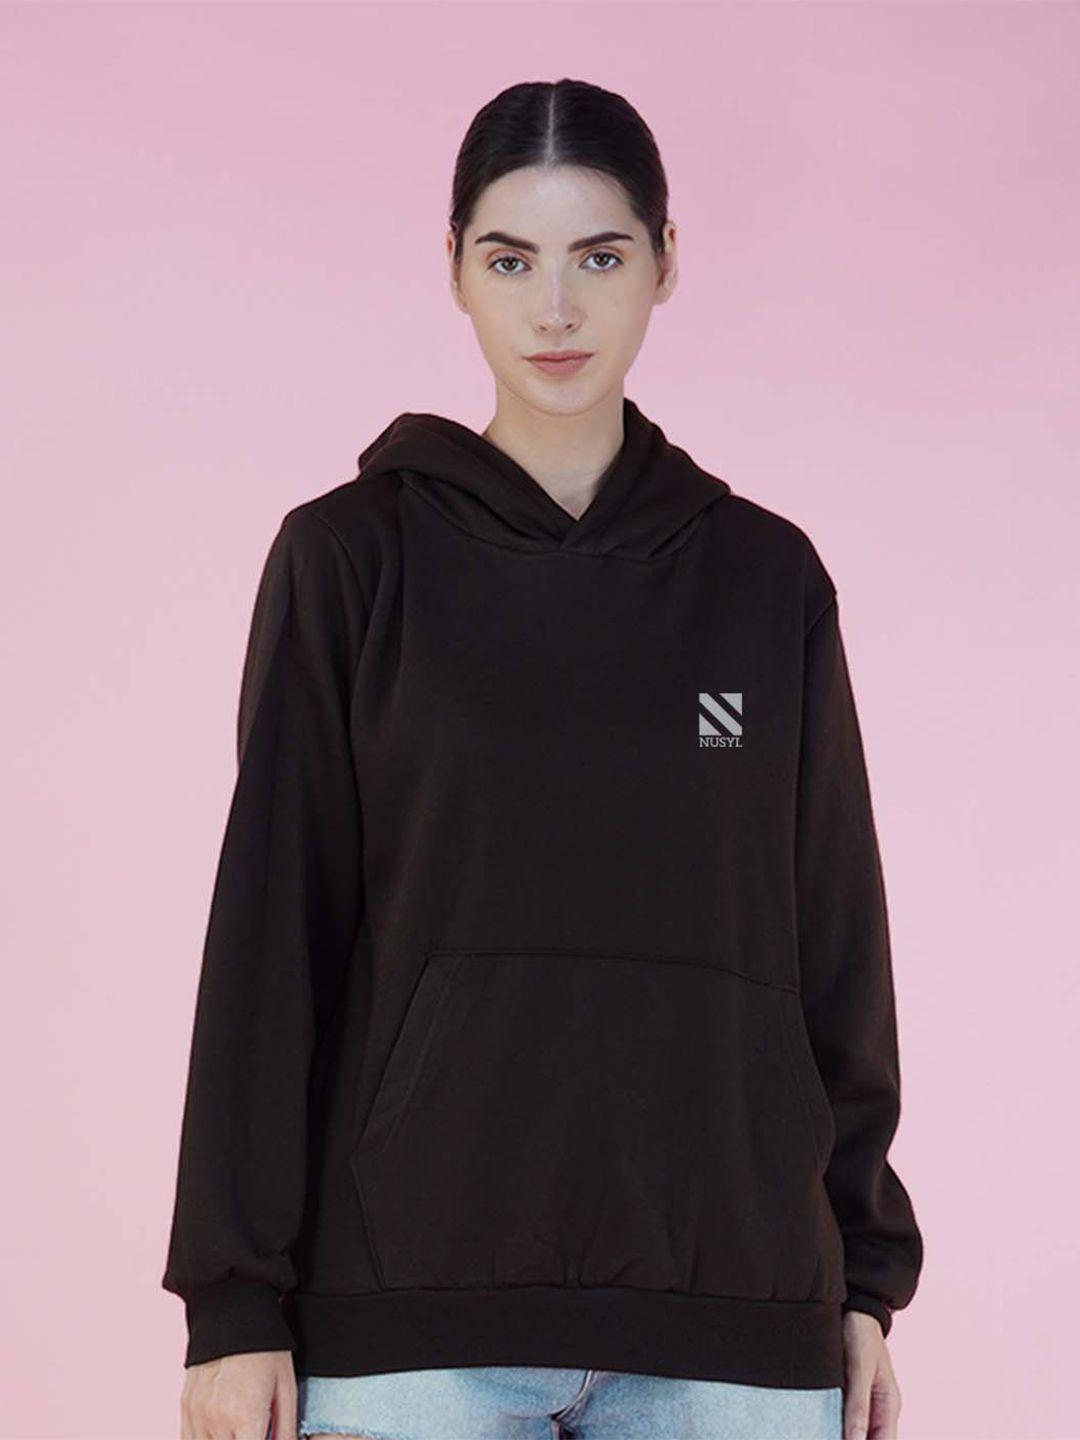 nusyl-brand-logo-printed-hooded-oversized-fleece-pullover-sweatshirt